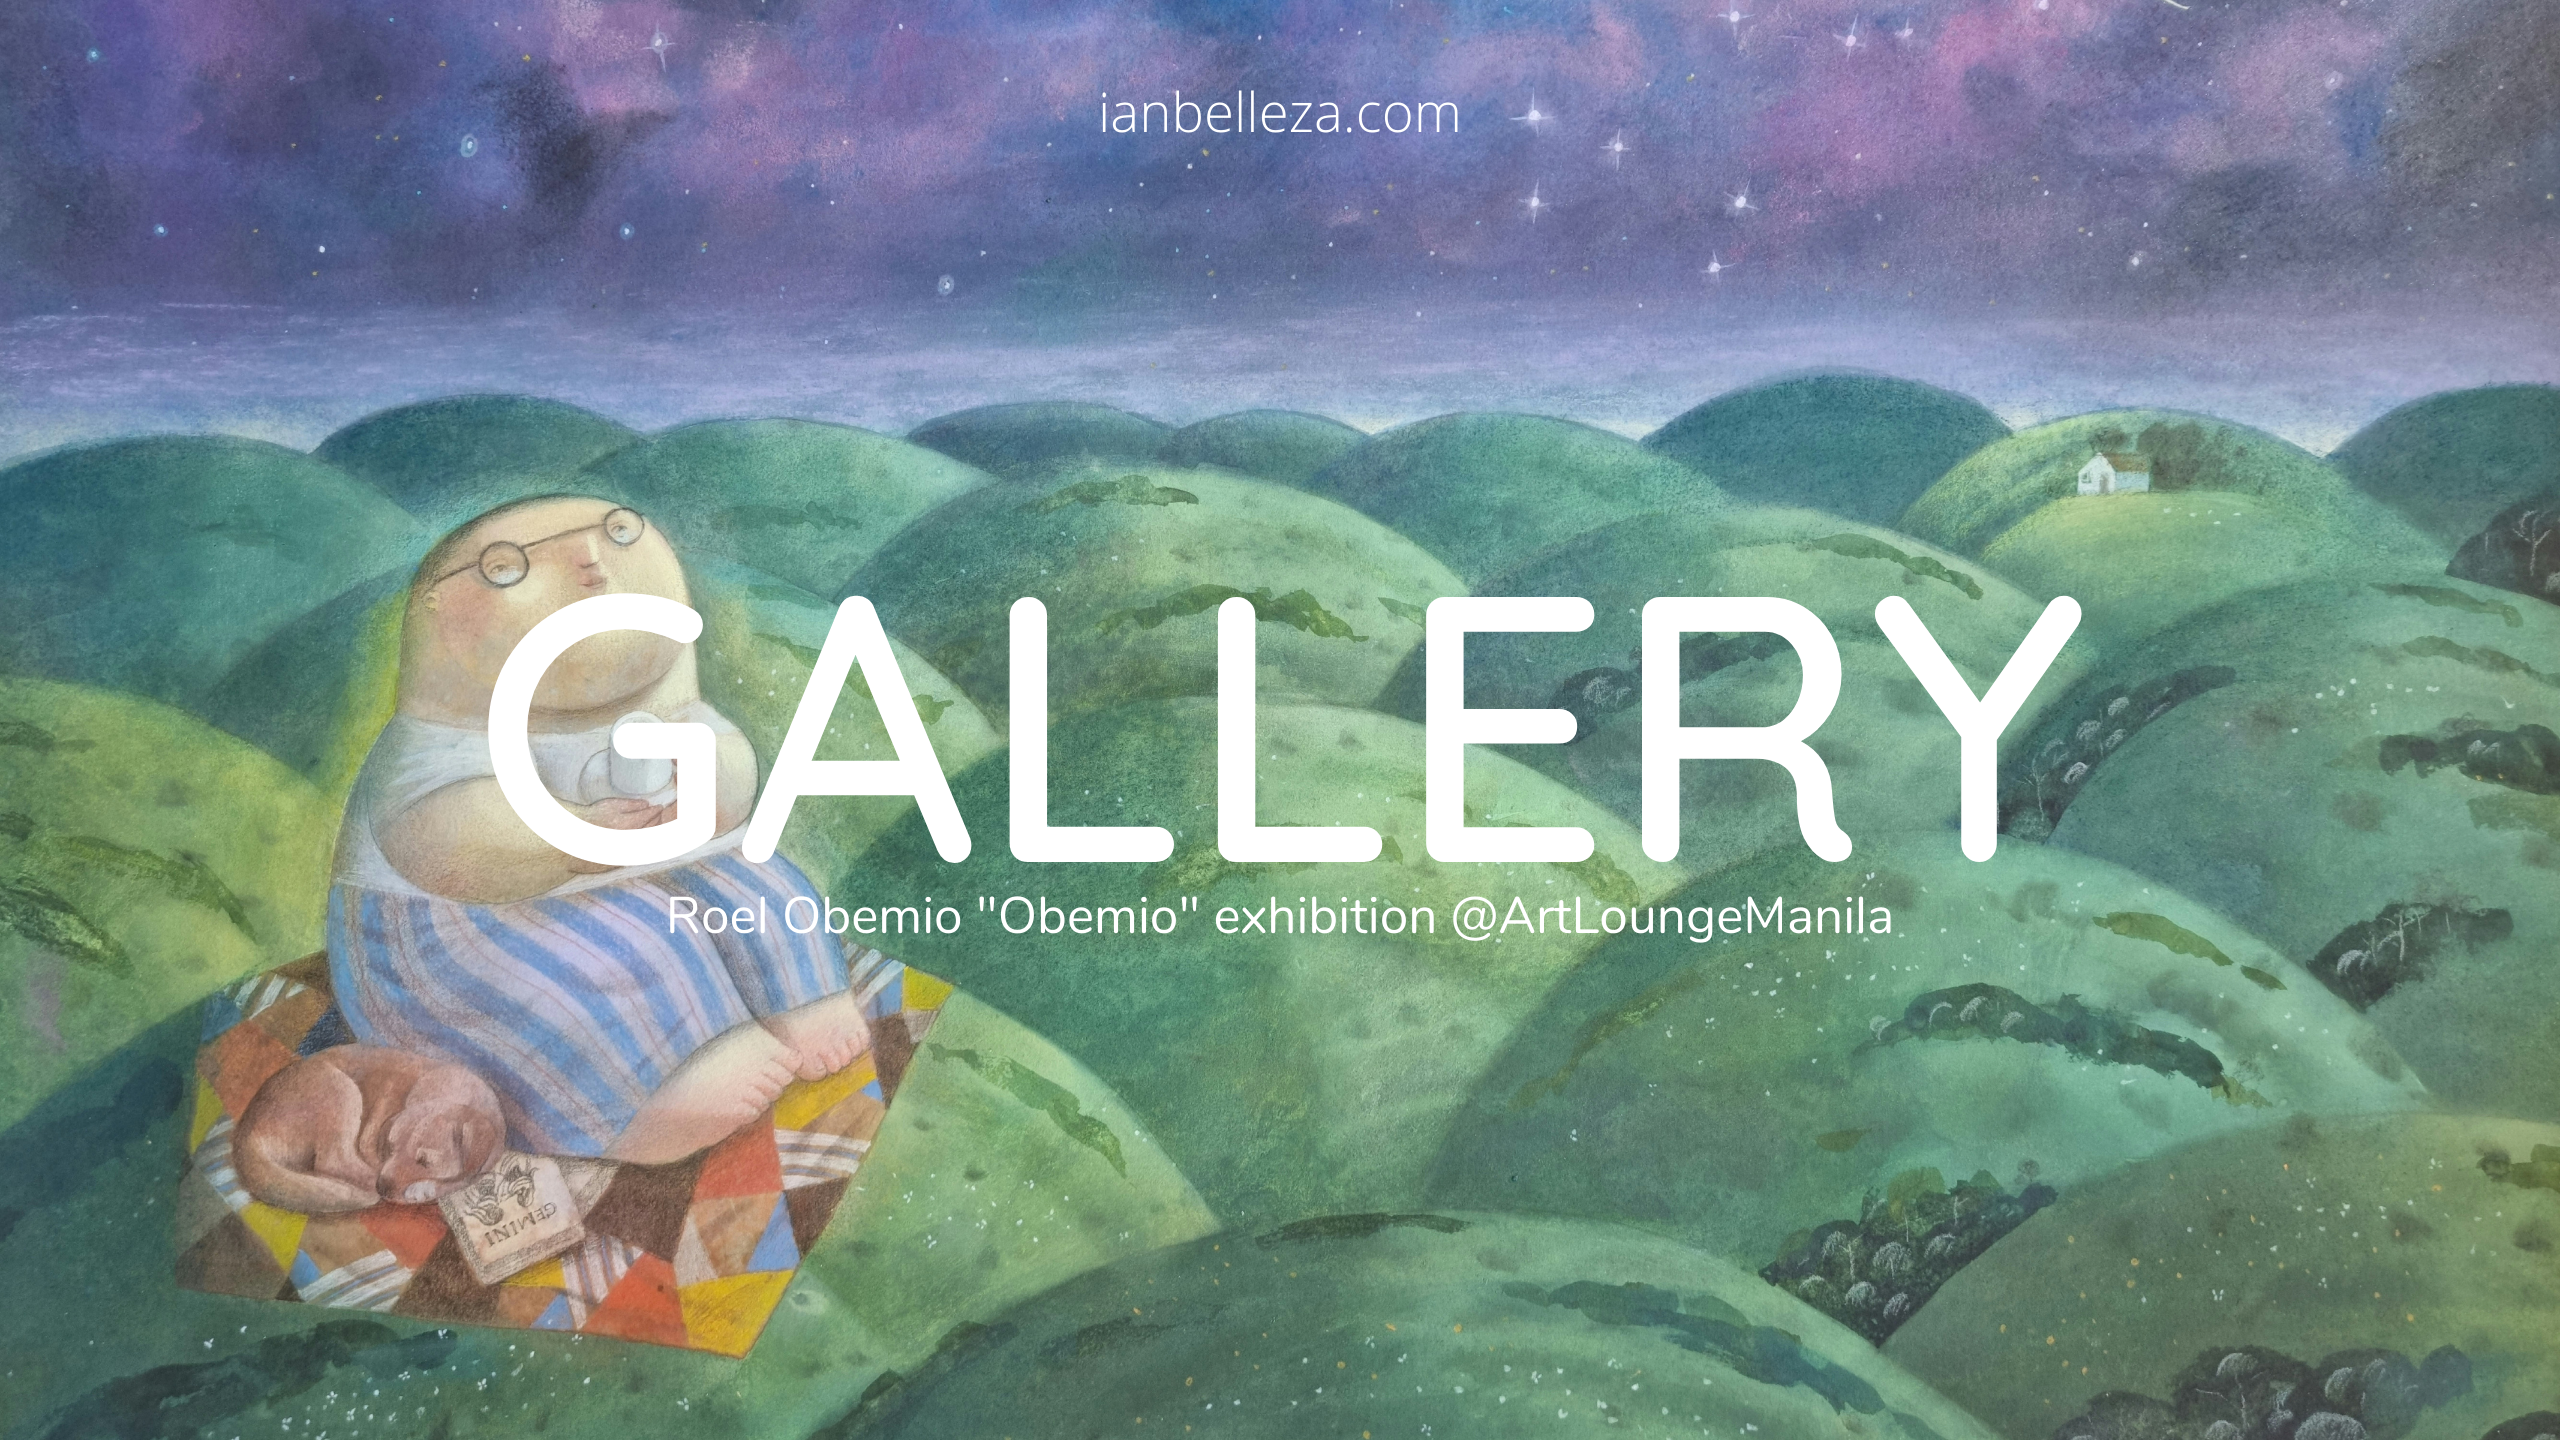 Gallery: Roel Obemio “Obemio” exhibition @ArtLoungeManila